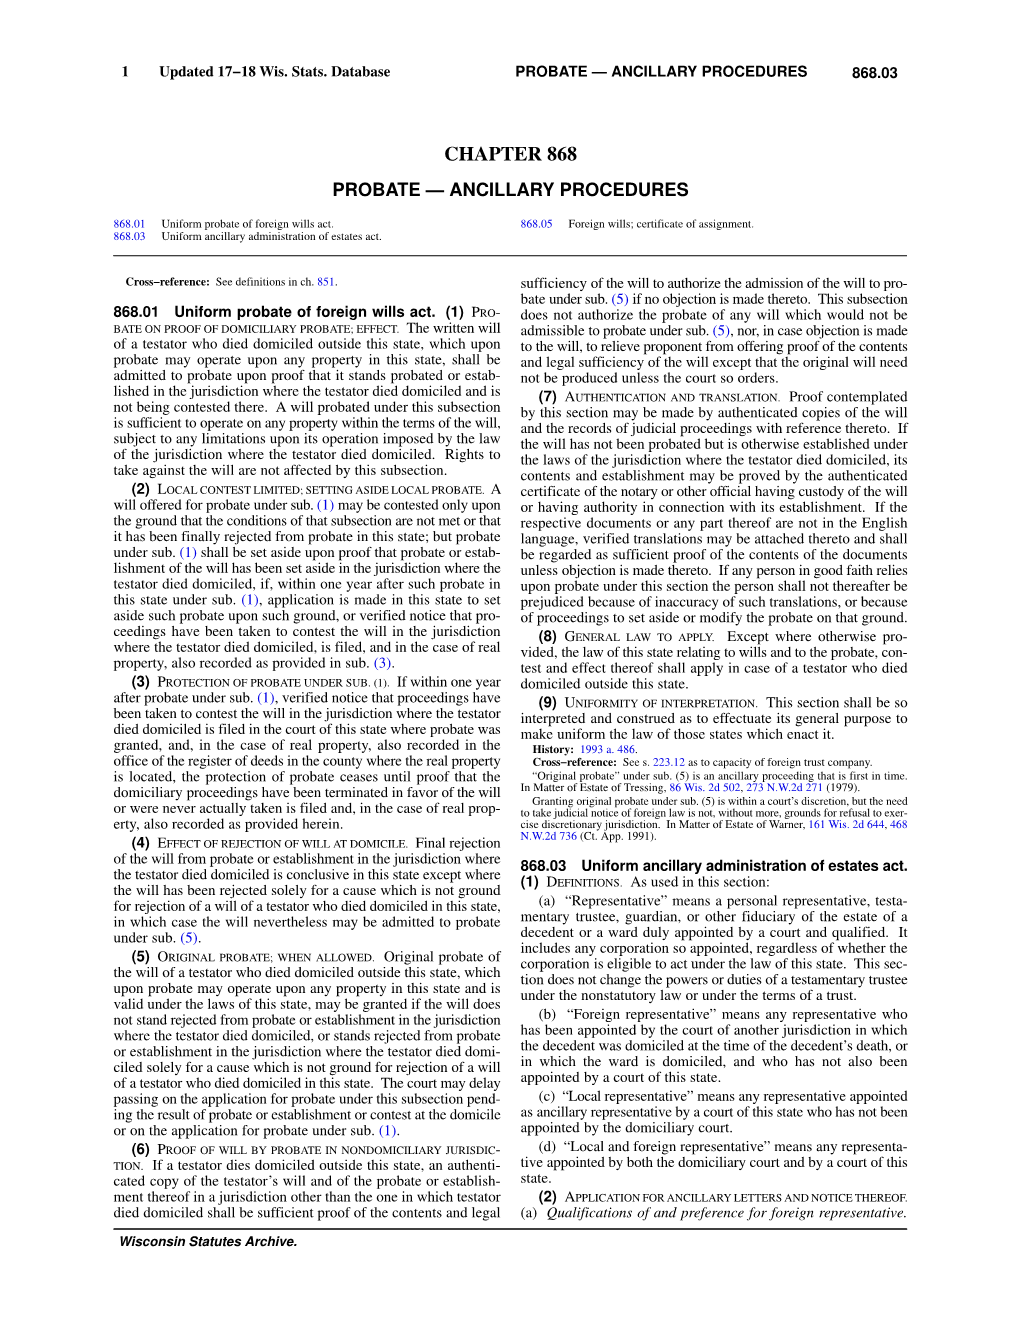 Chapter 868 Probate — Ancillary Procedures